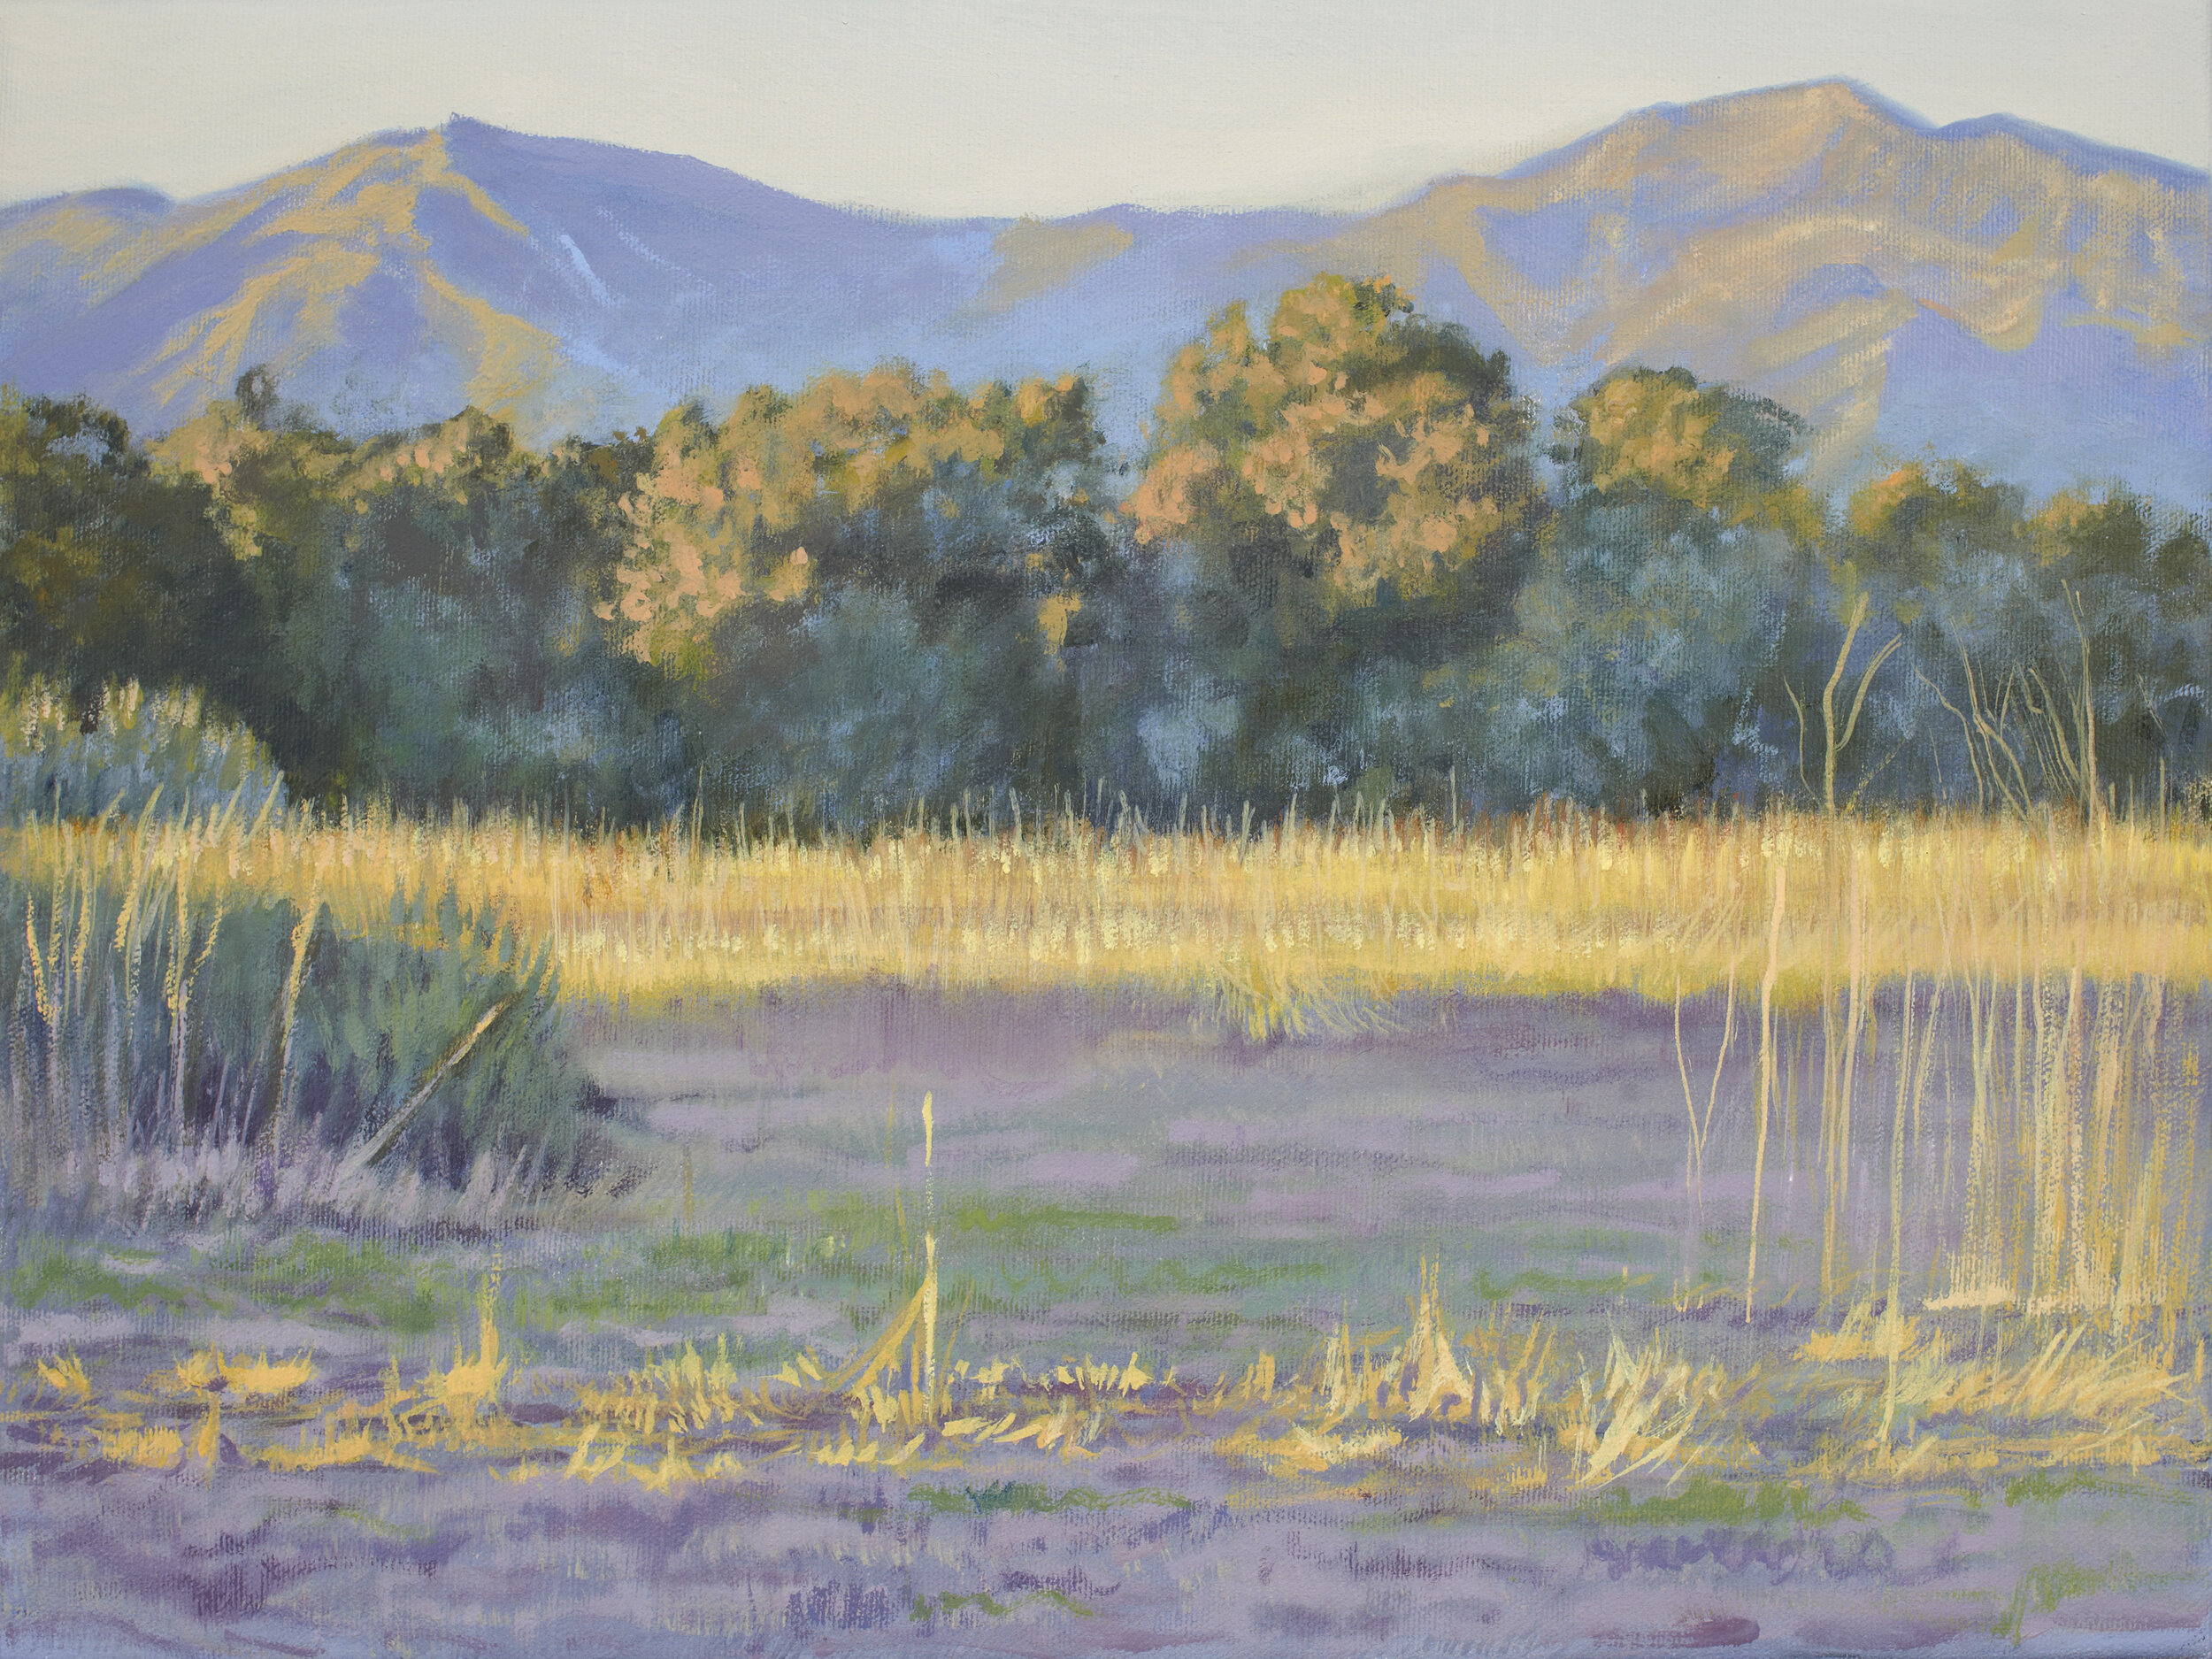 Karen Fedderson, "Last Light at Ellwood Mesa," Oil on canvas